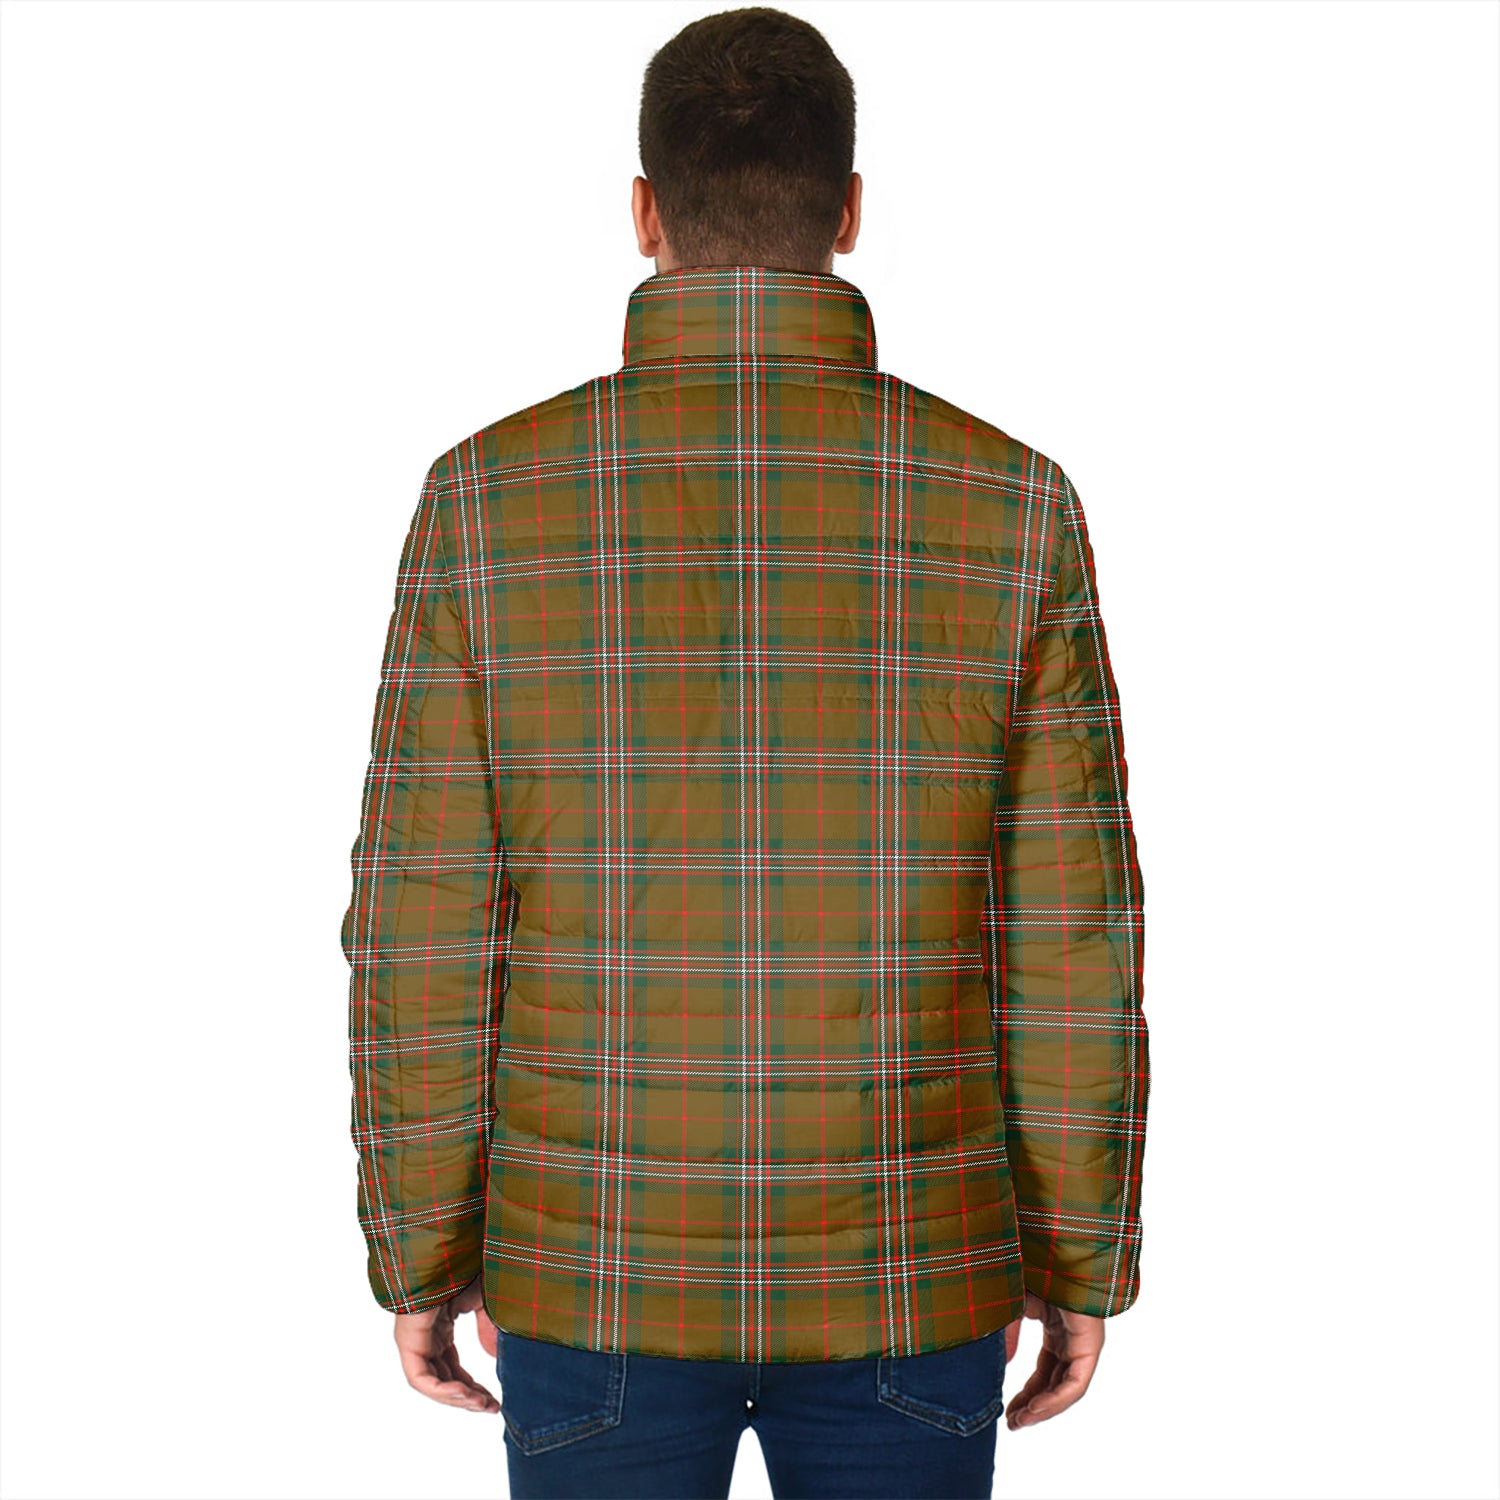 scott-brown-modern-tartan-padded-jacket-with-family-crest